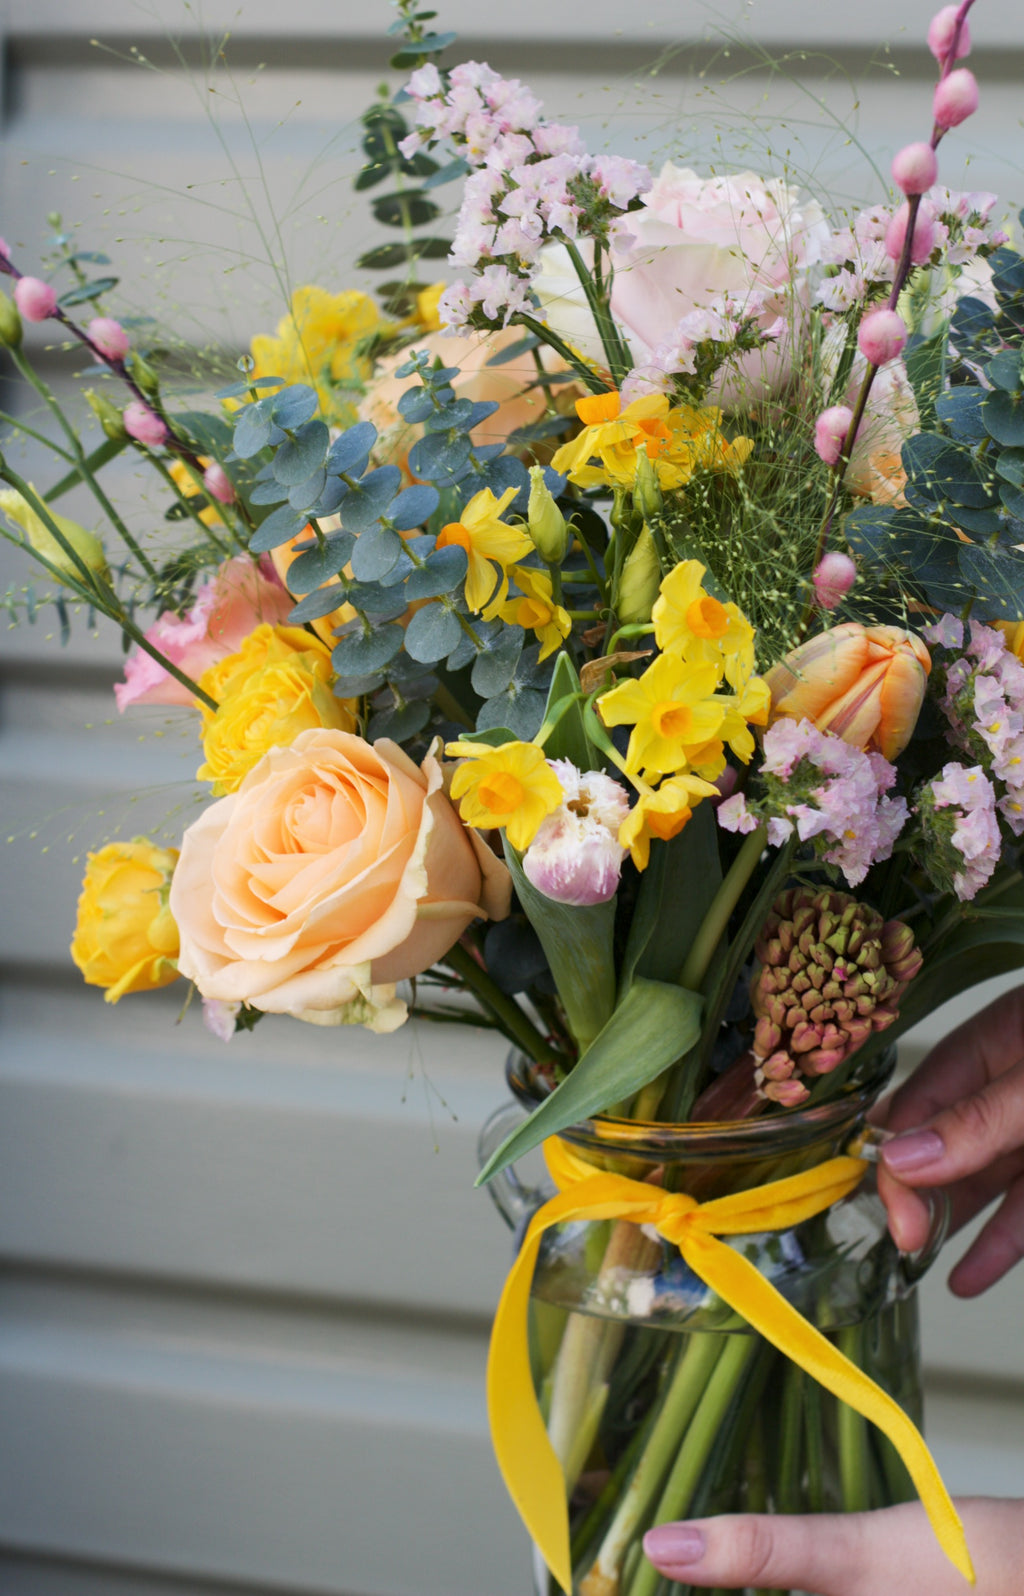 tigerlily florist guernsey flowers delivery wedding flower creative bouquet